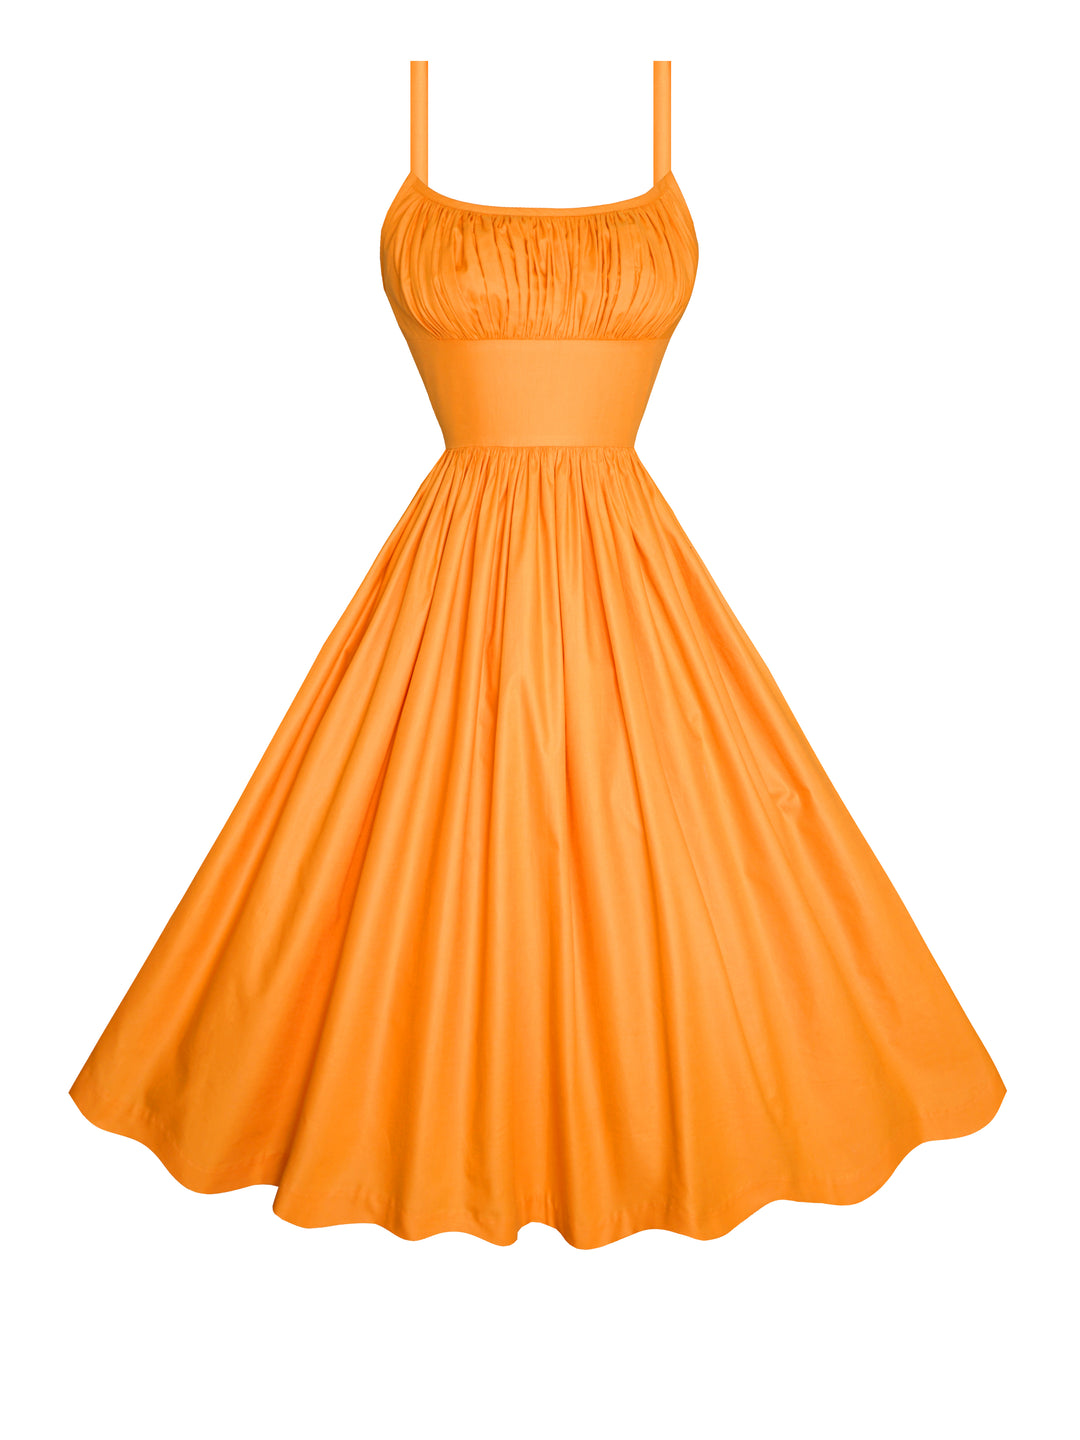 MTO - Grace Dress in Pumpkin Orange Cotton